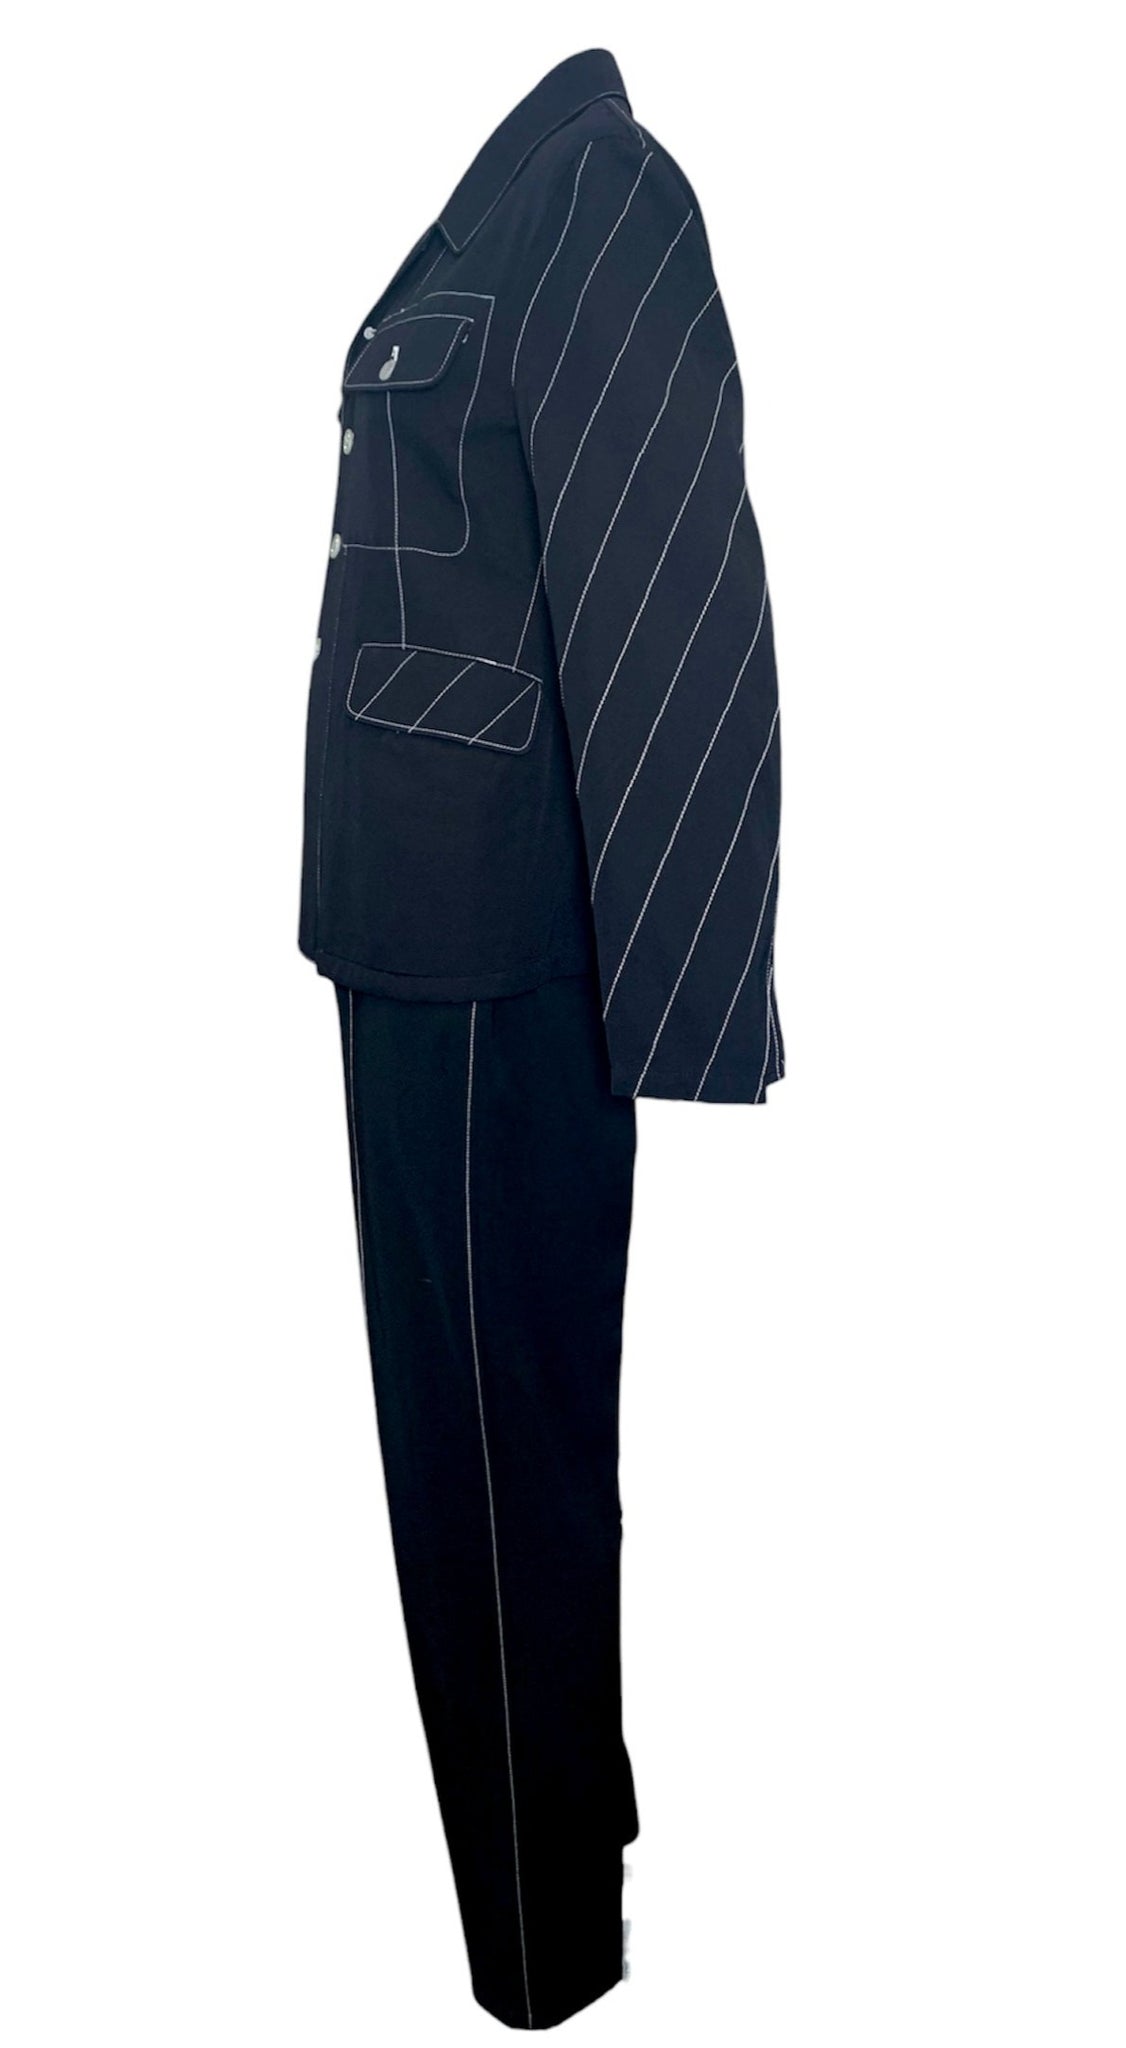  Yohji Yamamoto 90s Black Pant Suit Ensemble with White Contrast Stitching SIDE 2 of 6